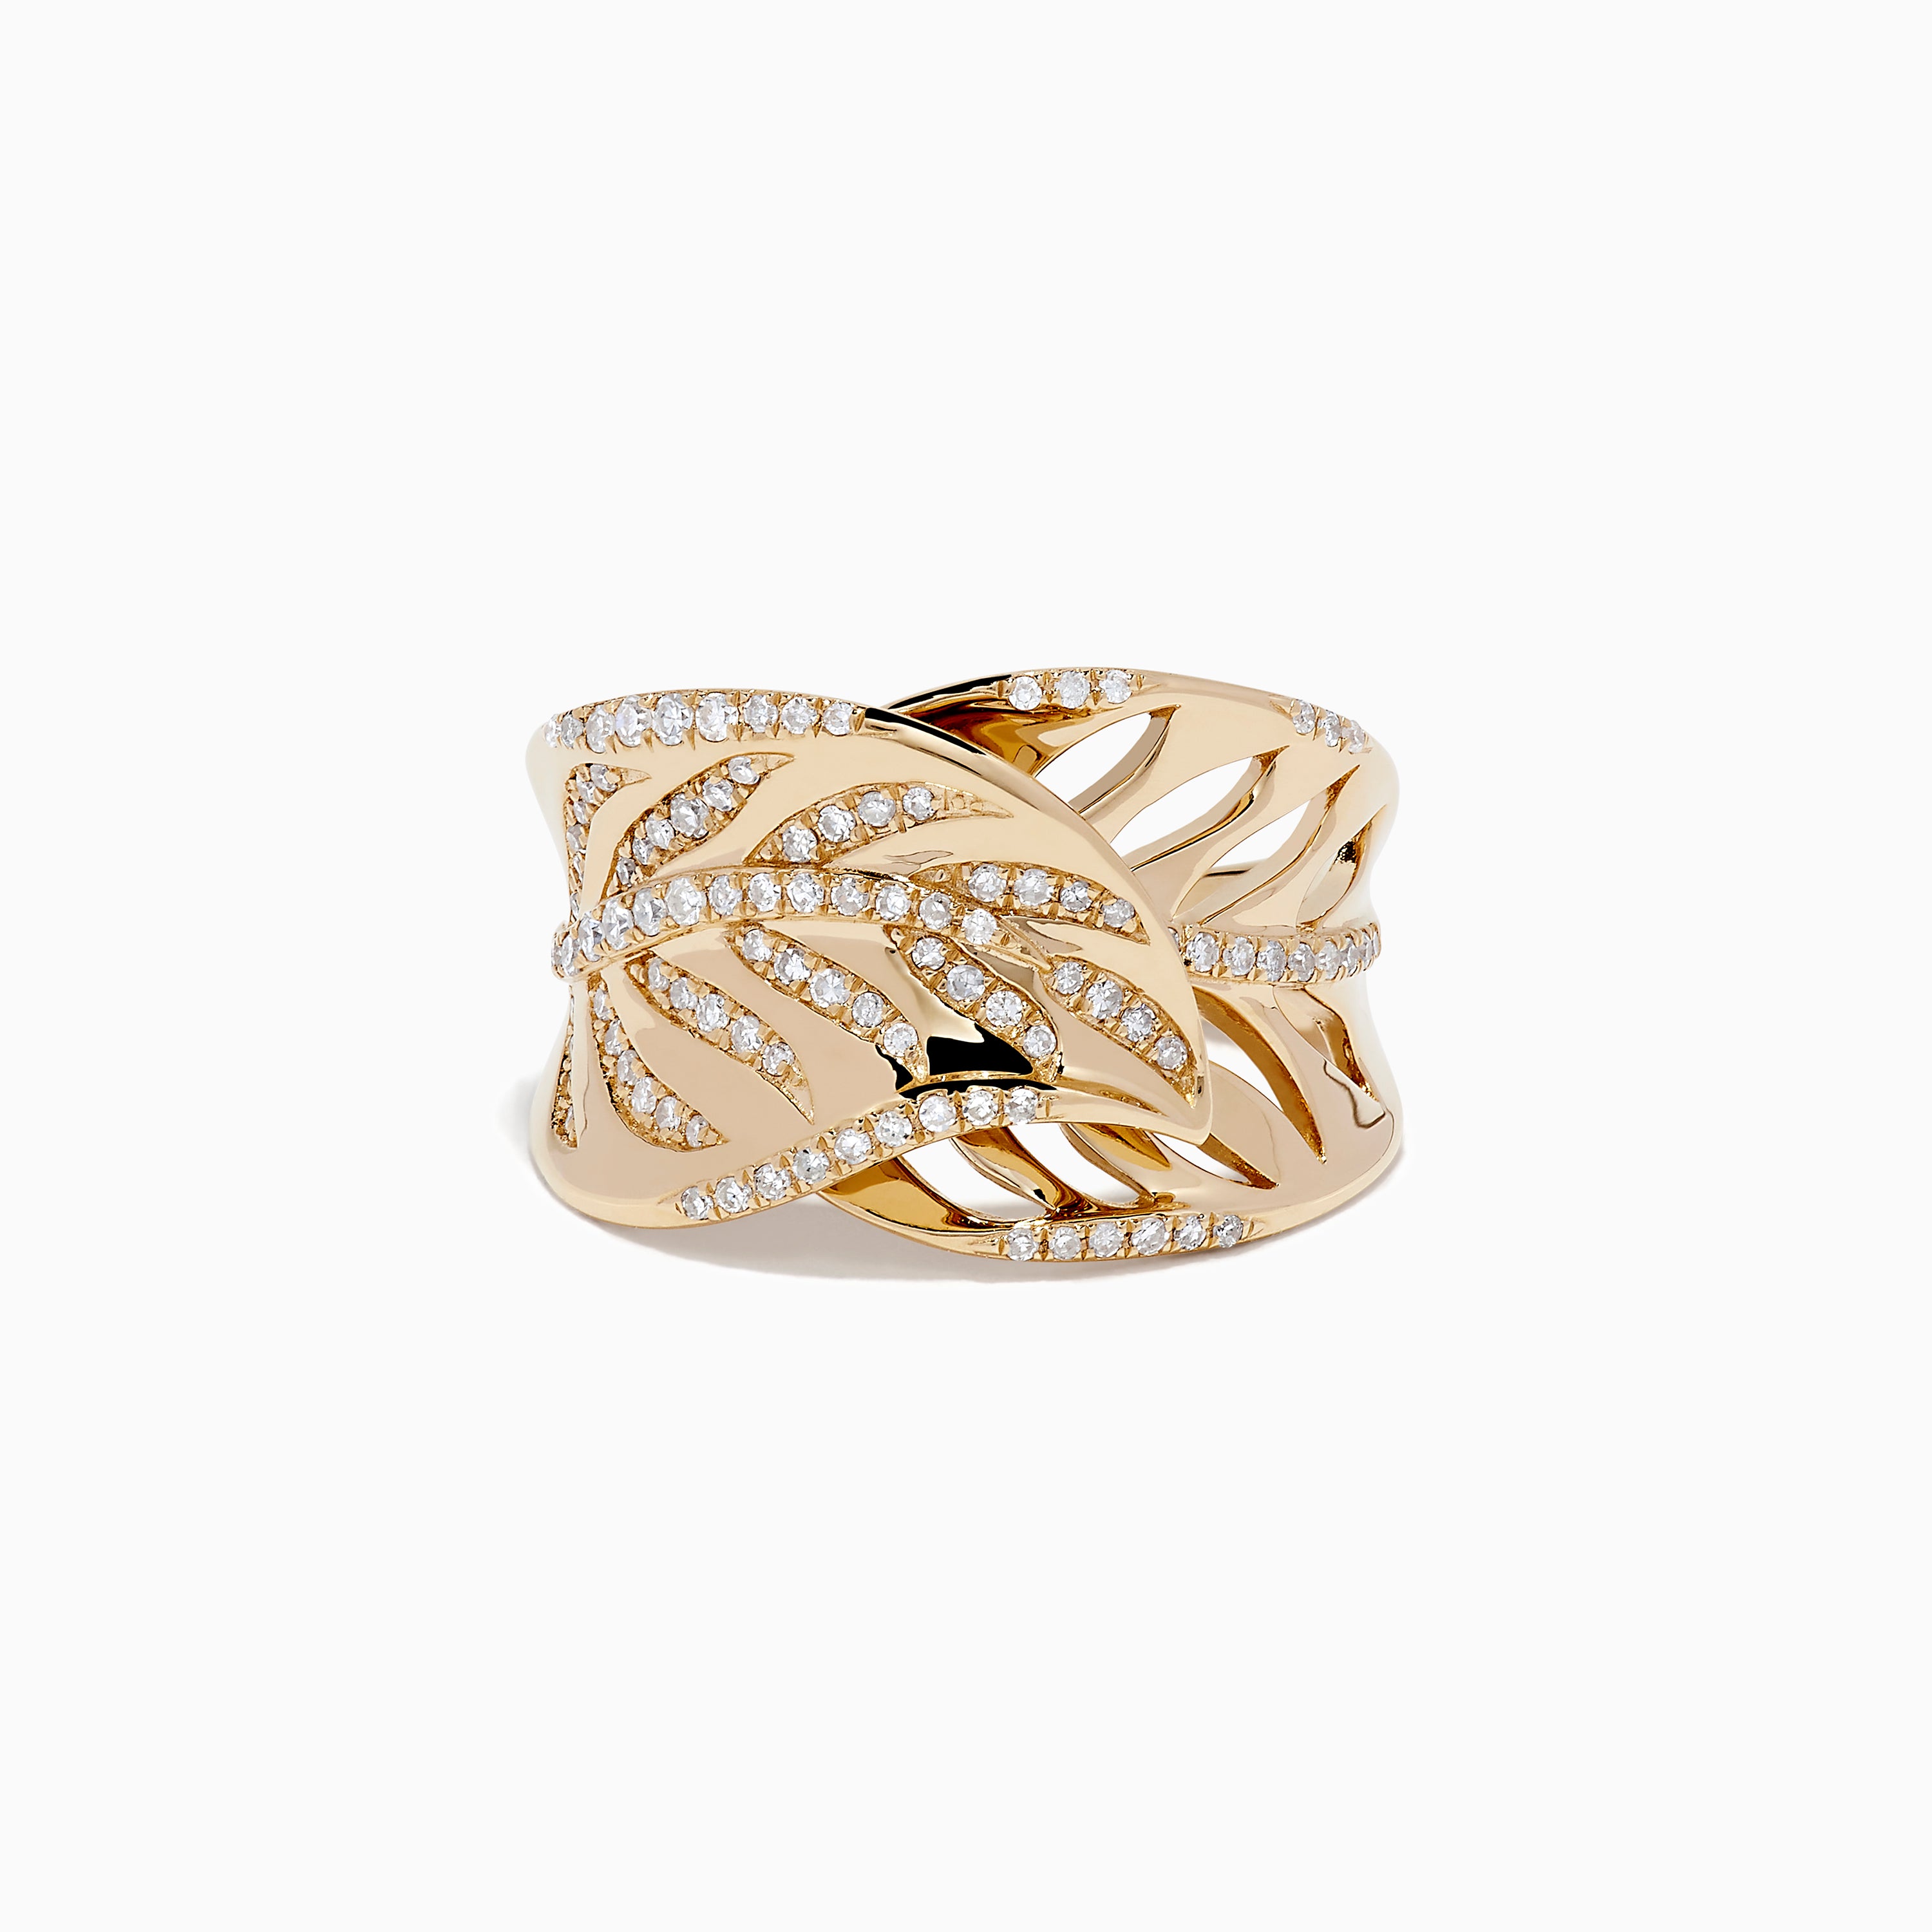 Effy D'Oro 14K Yellow Gold Diamond Ring